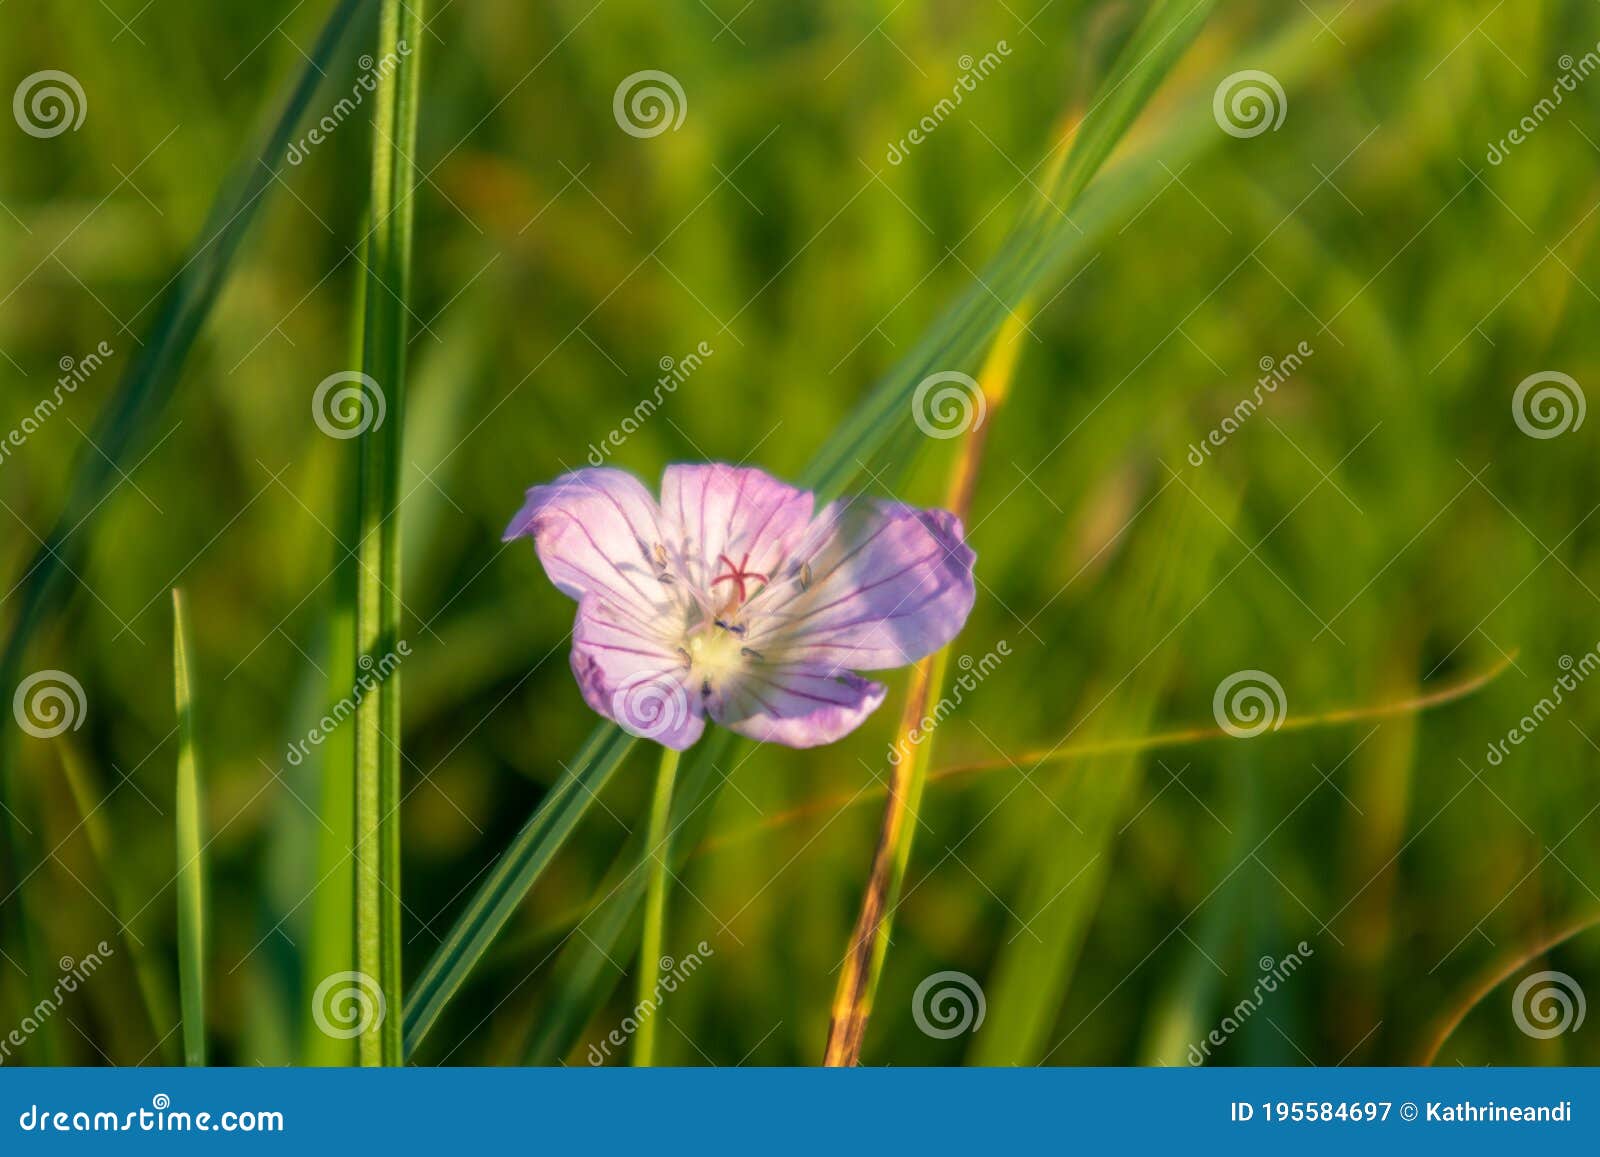 close-up of blooming purple oxalis oregana flower